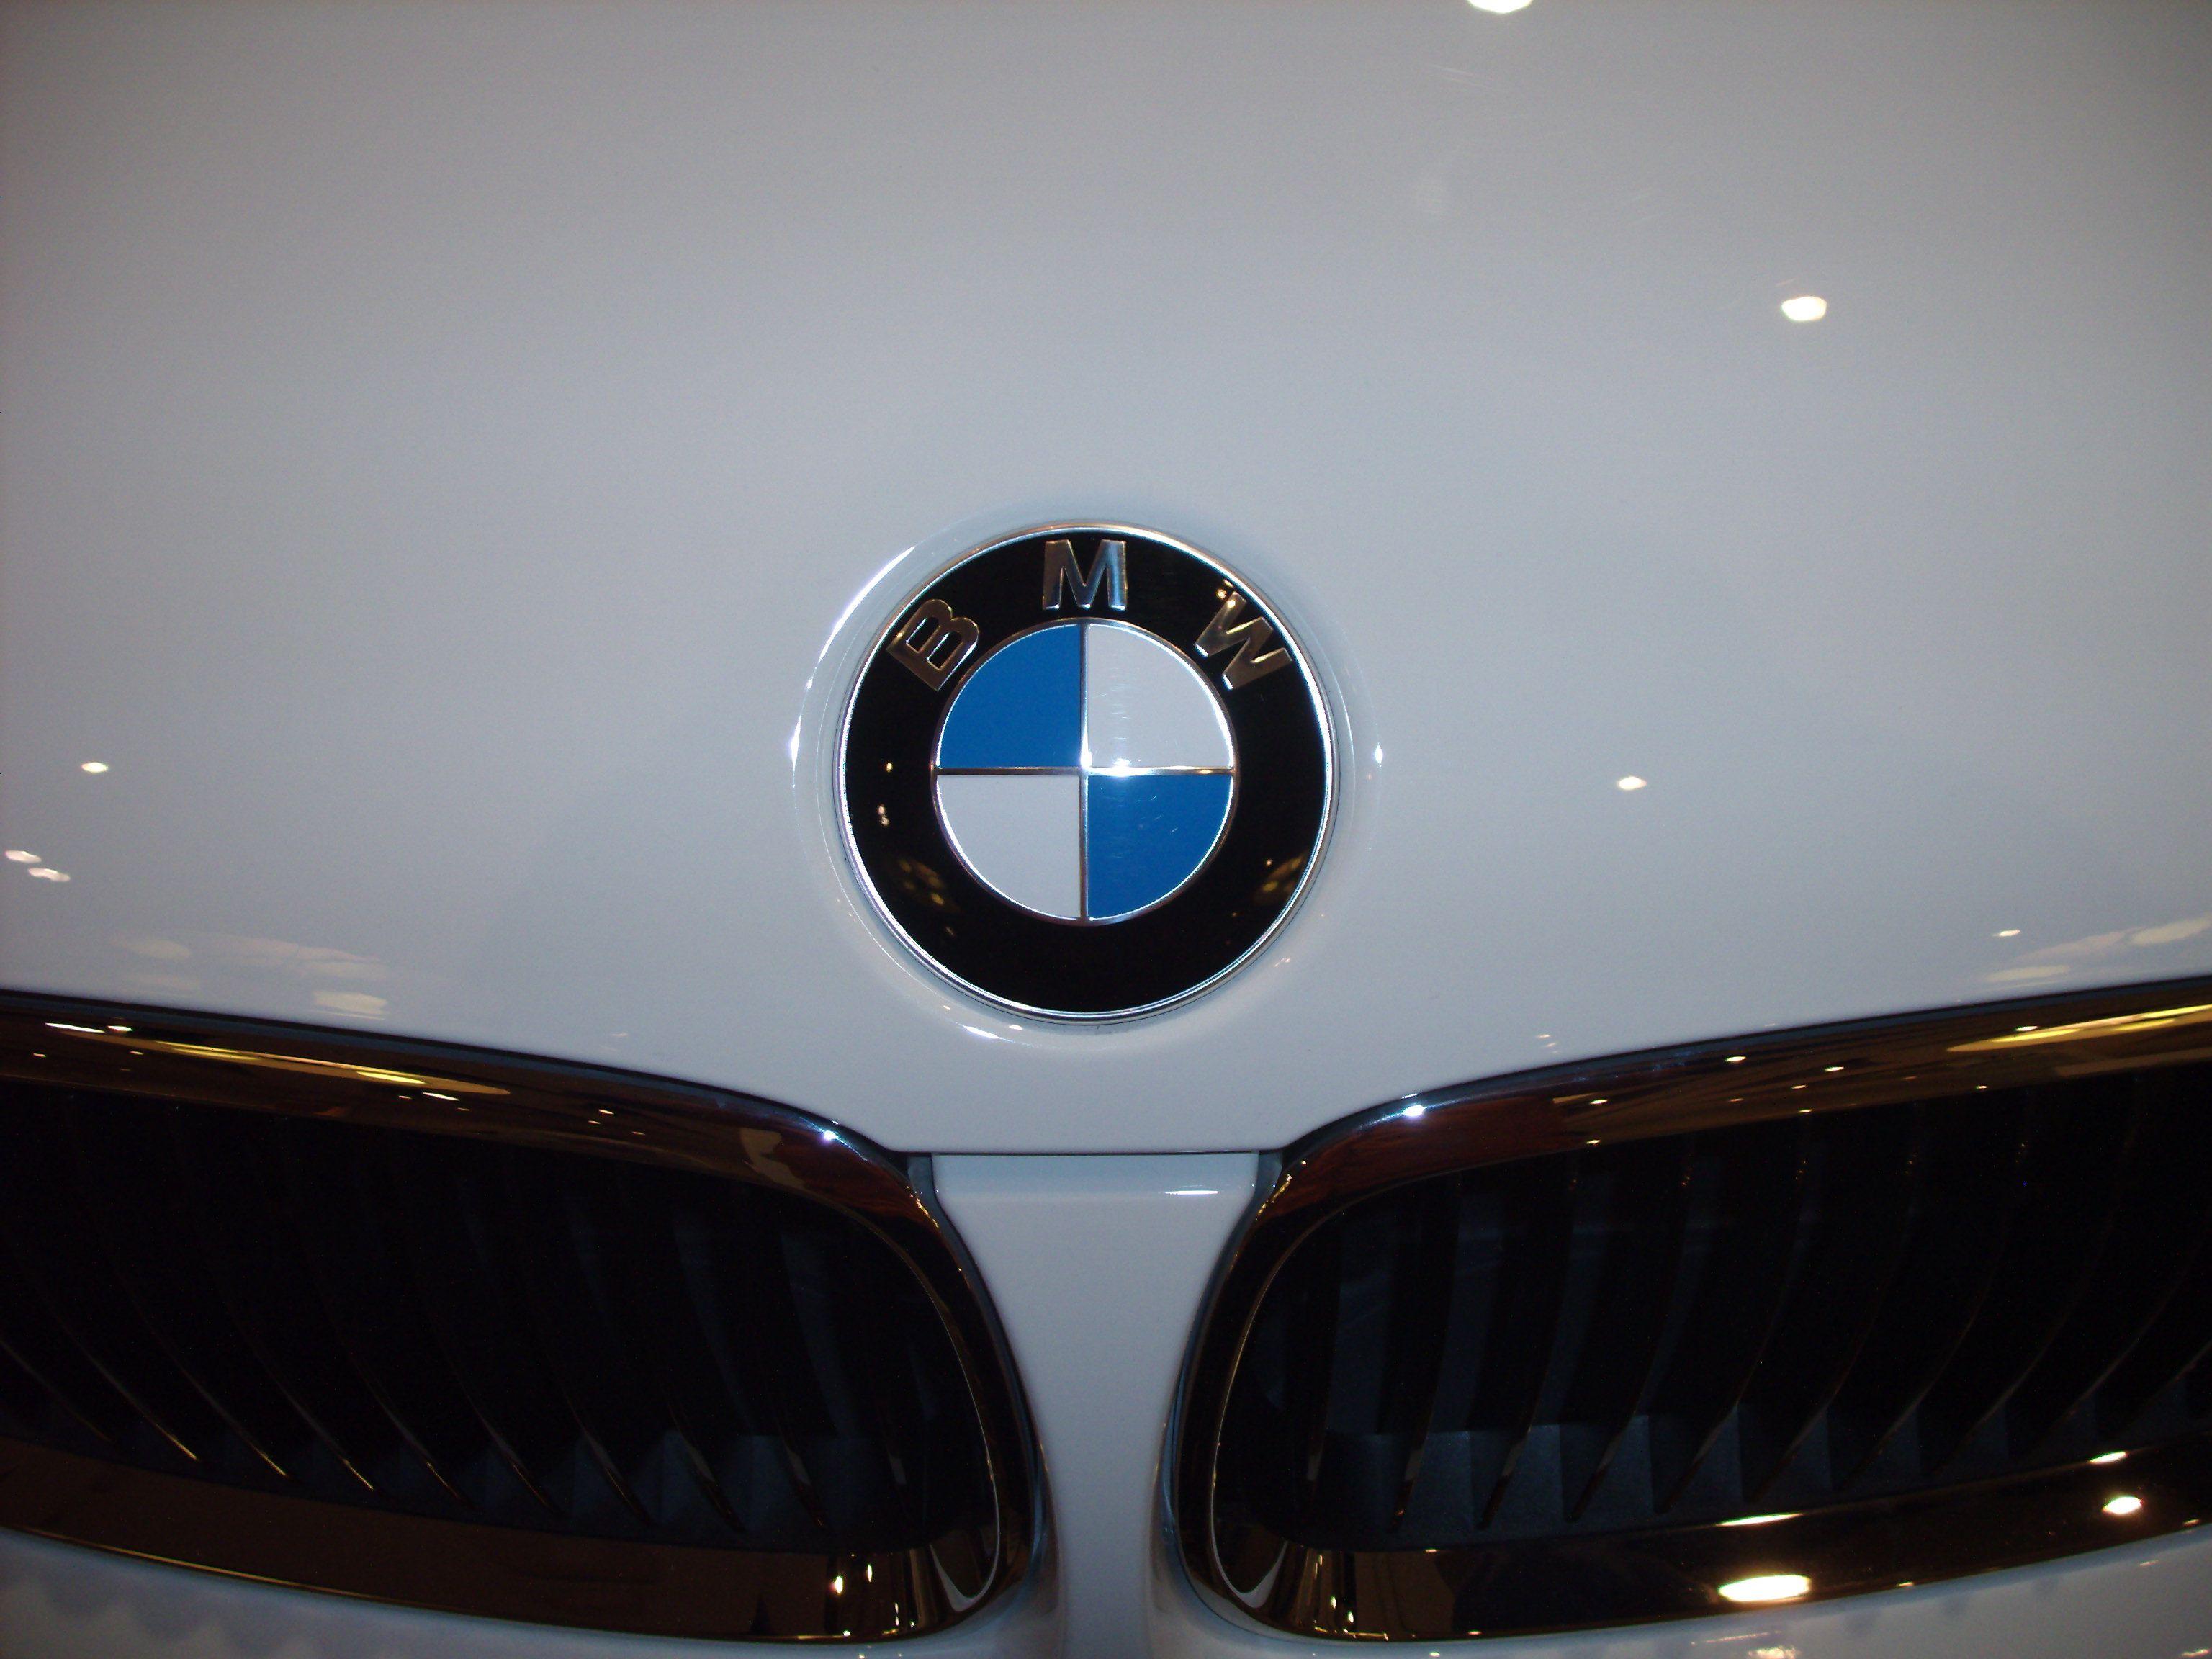 Subsidiary of BMW Logo - File:BMW Logo on White Car.jpg - Wikimedia Commons